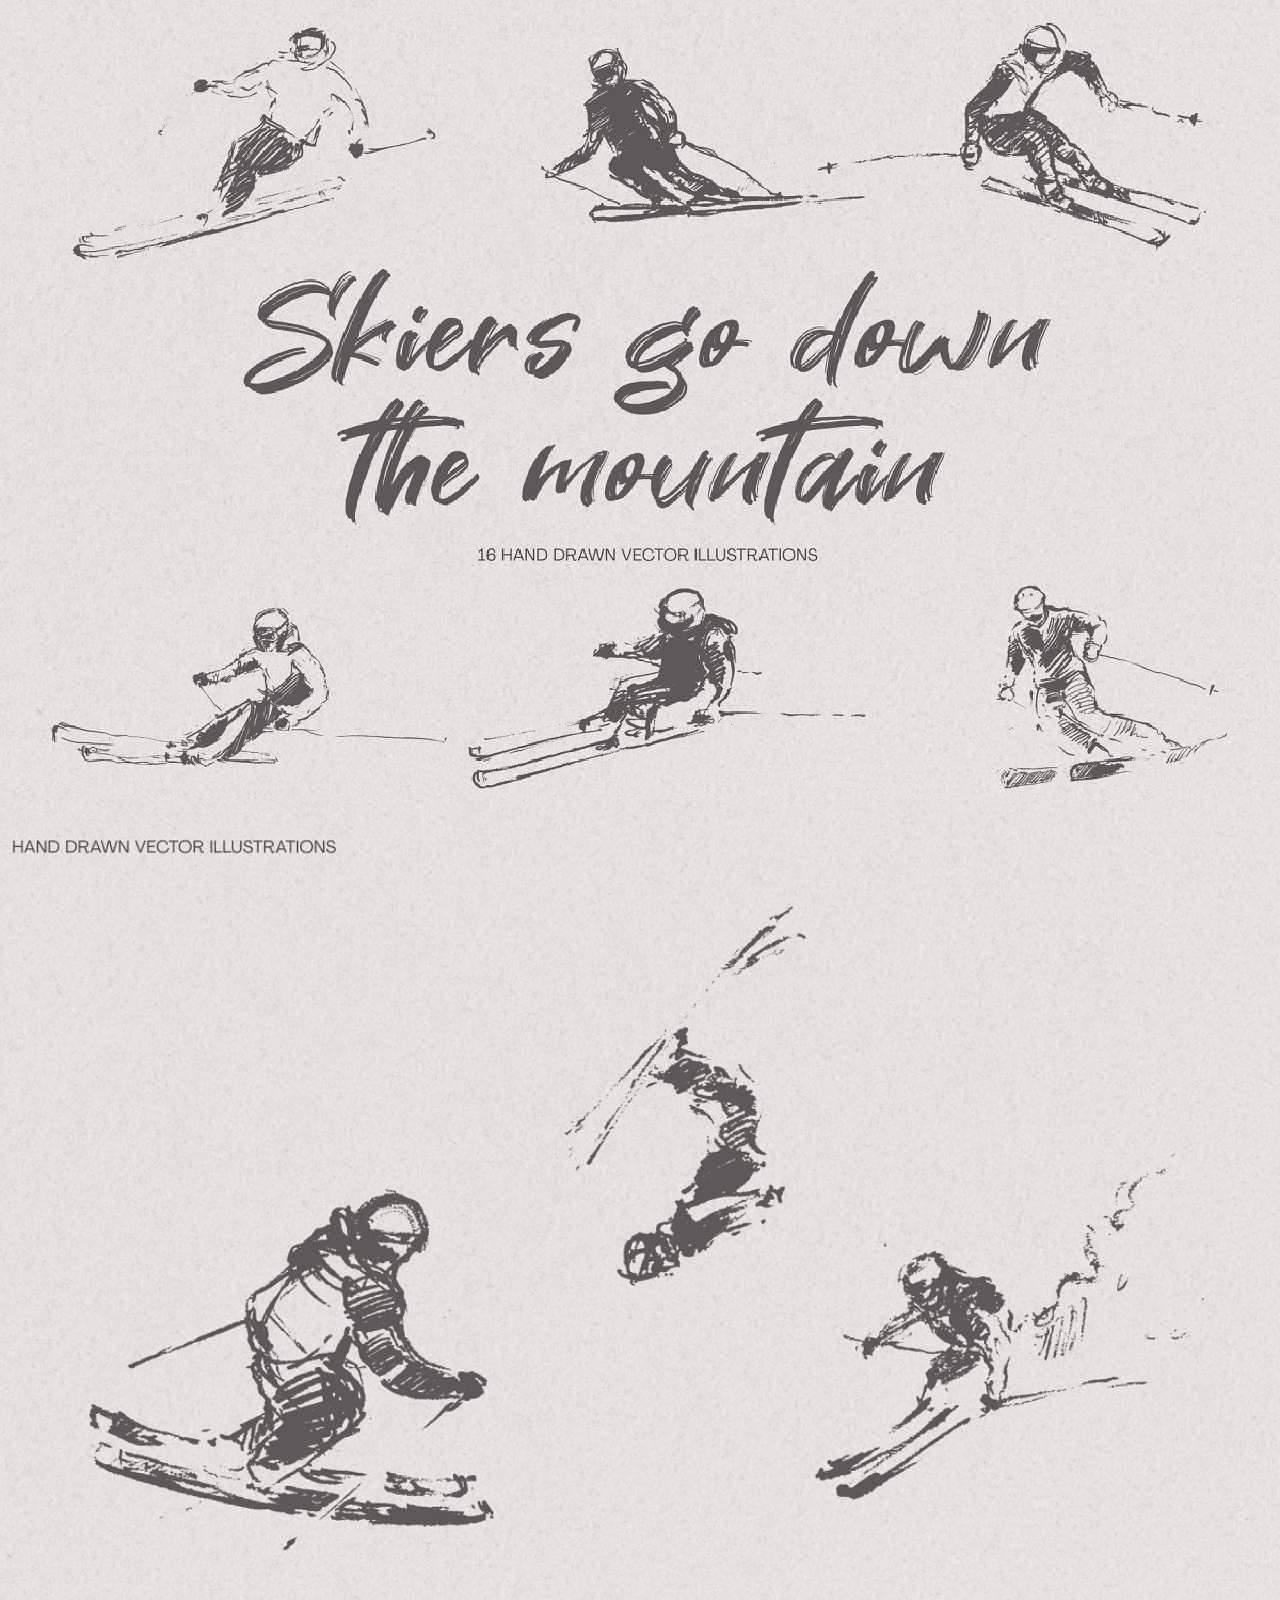 Skiers go down the mountain pinterest image.